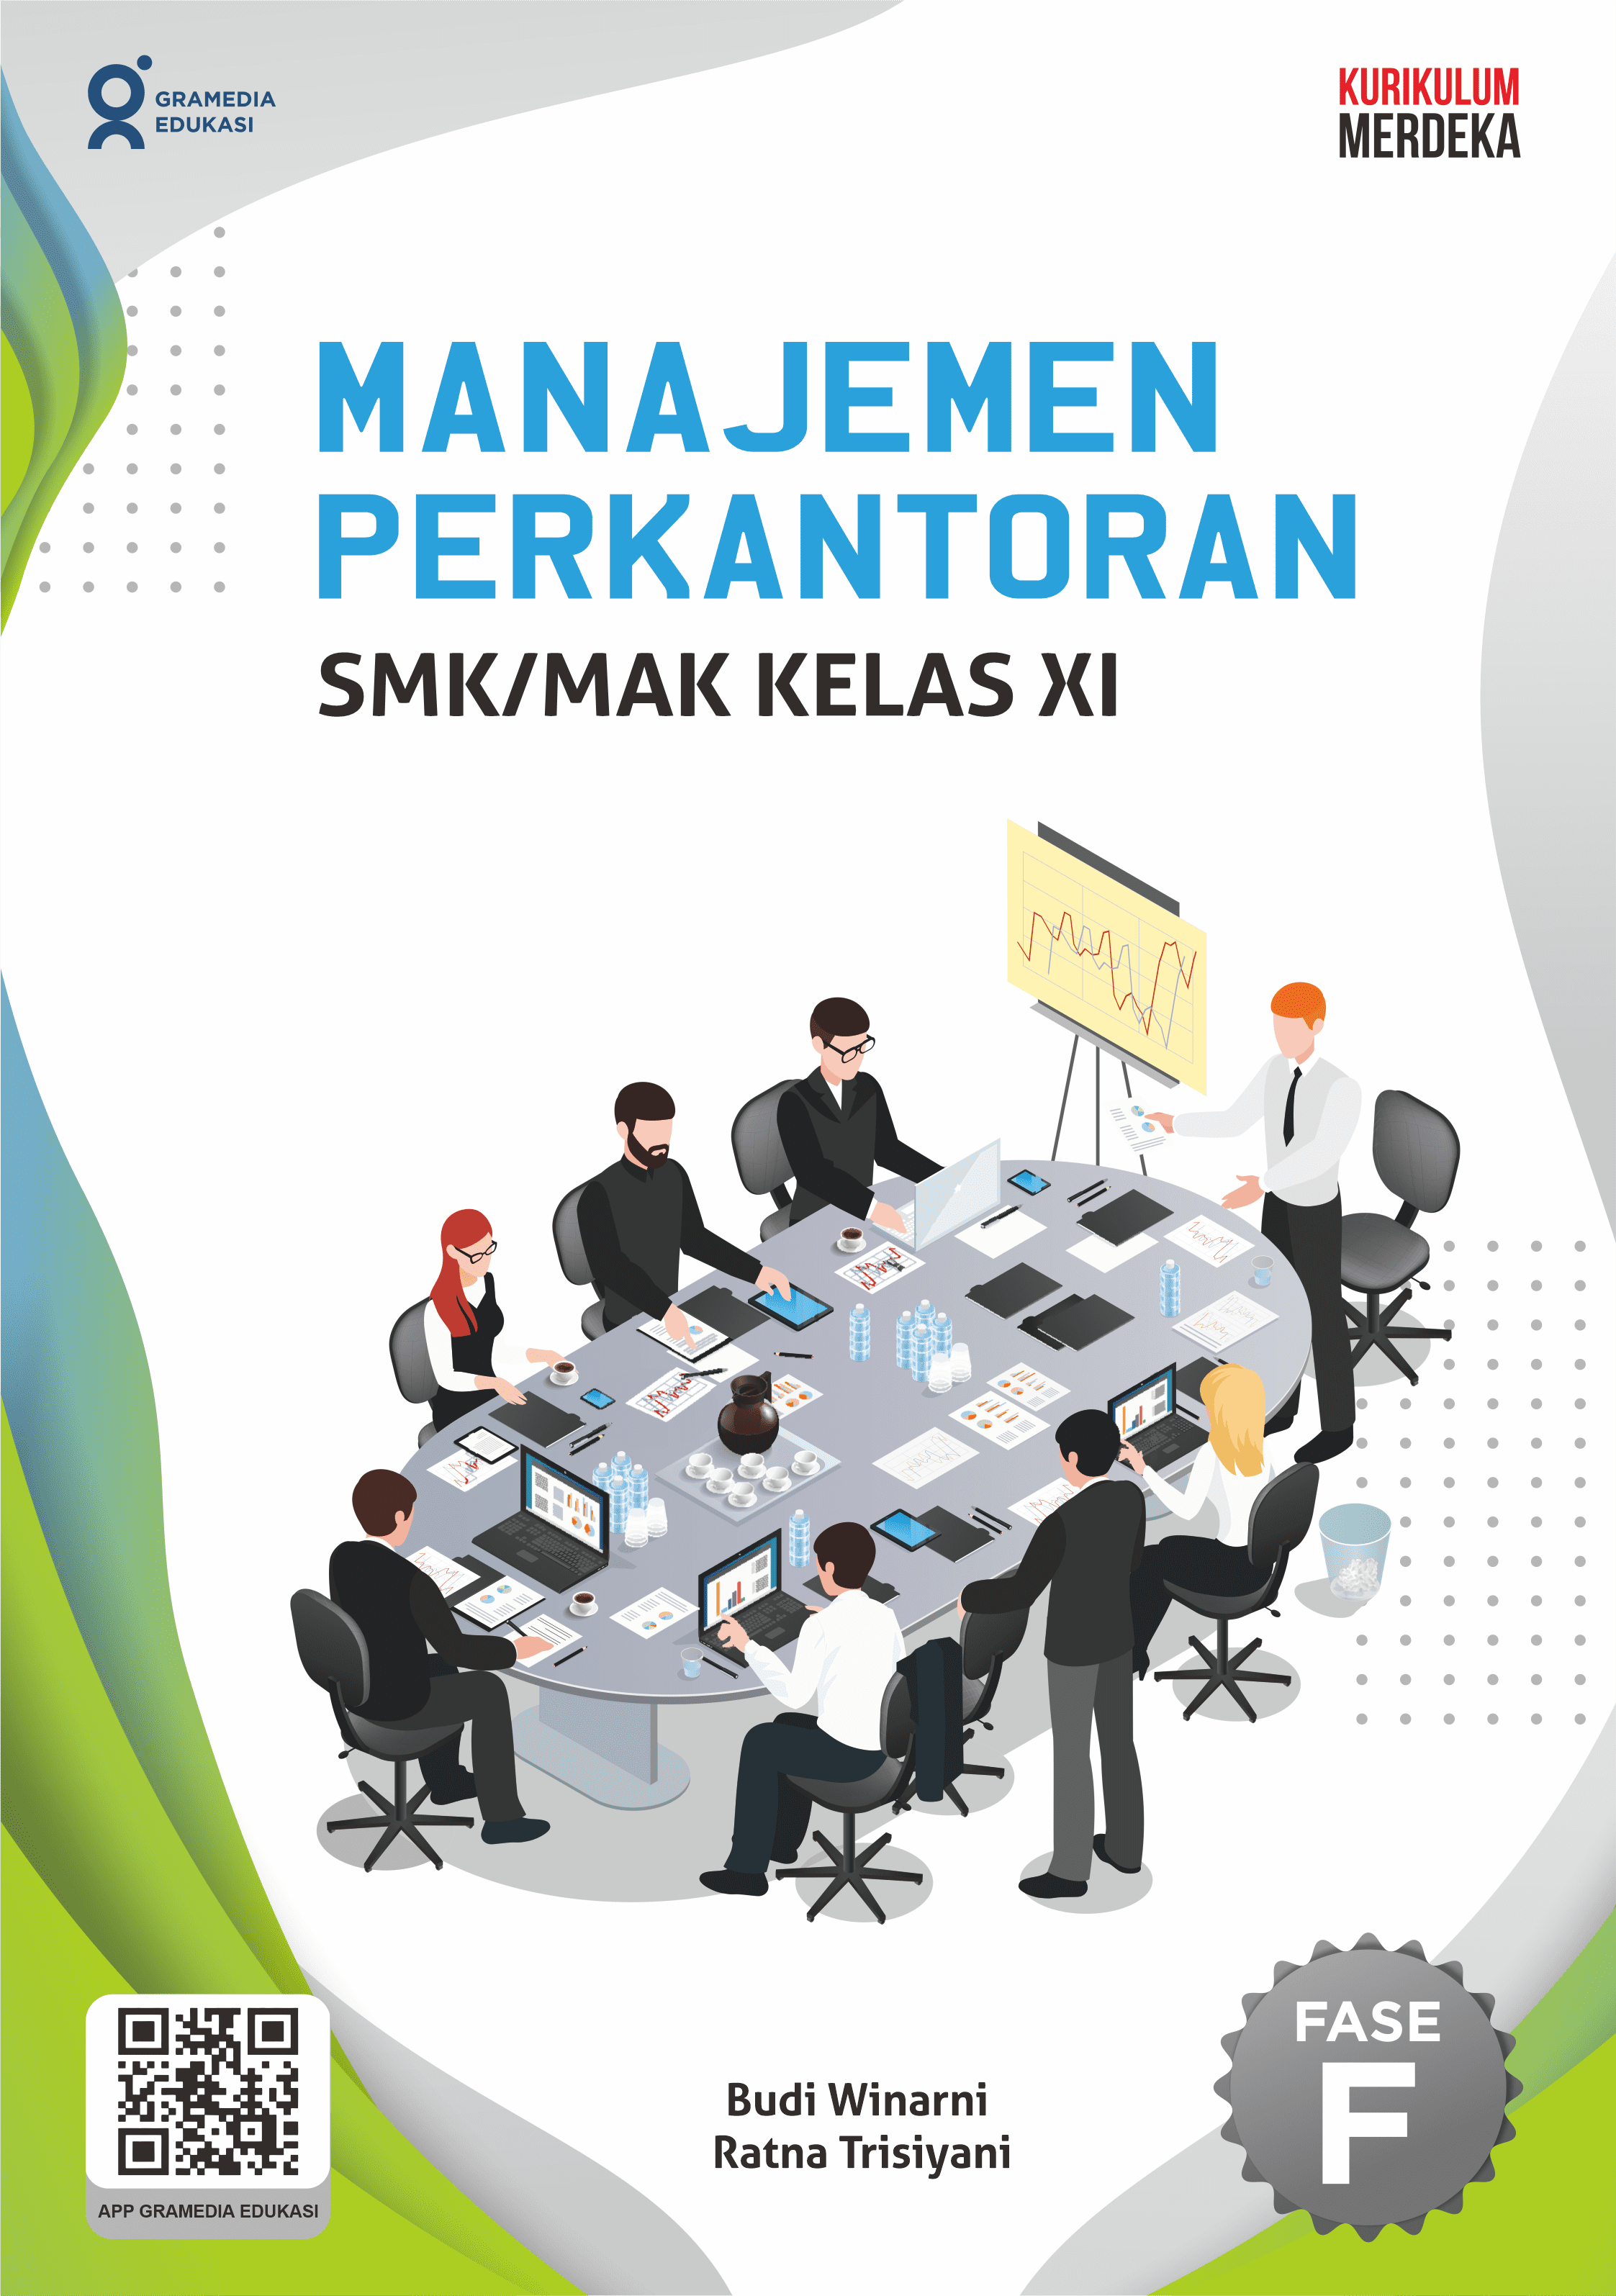 Manajemen perkantoran SMK/MAK Kelas XI